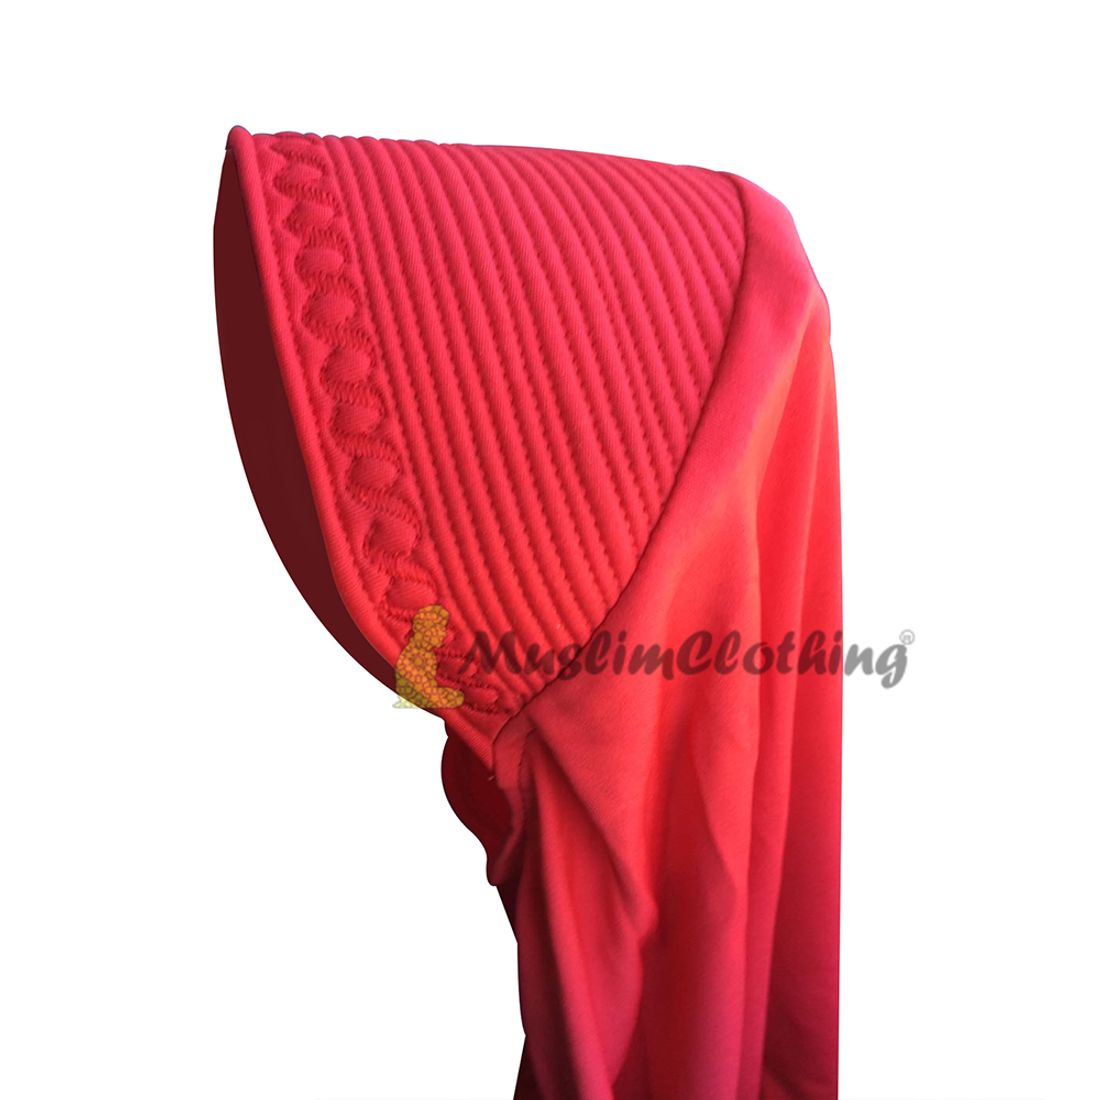 Instant Pull-on Easy Hijab Jilbabs in Various Red – Padded Visser Shoulder-length Easy Muslimah Khimar